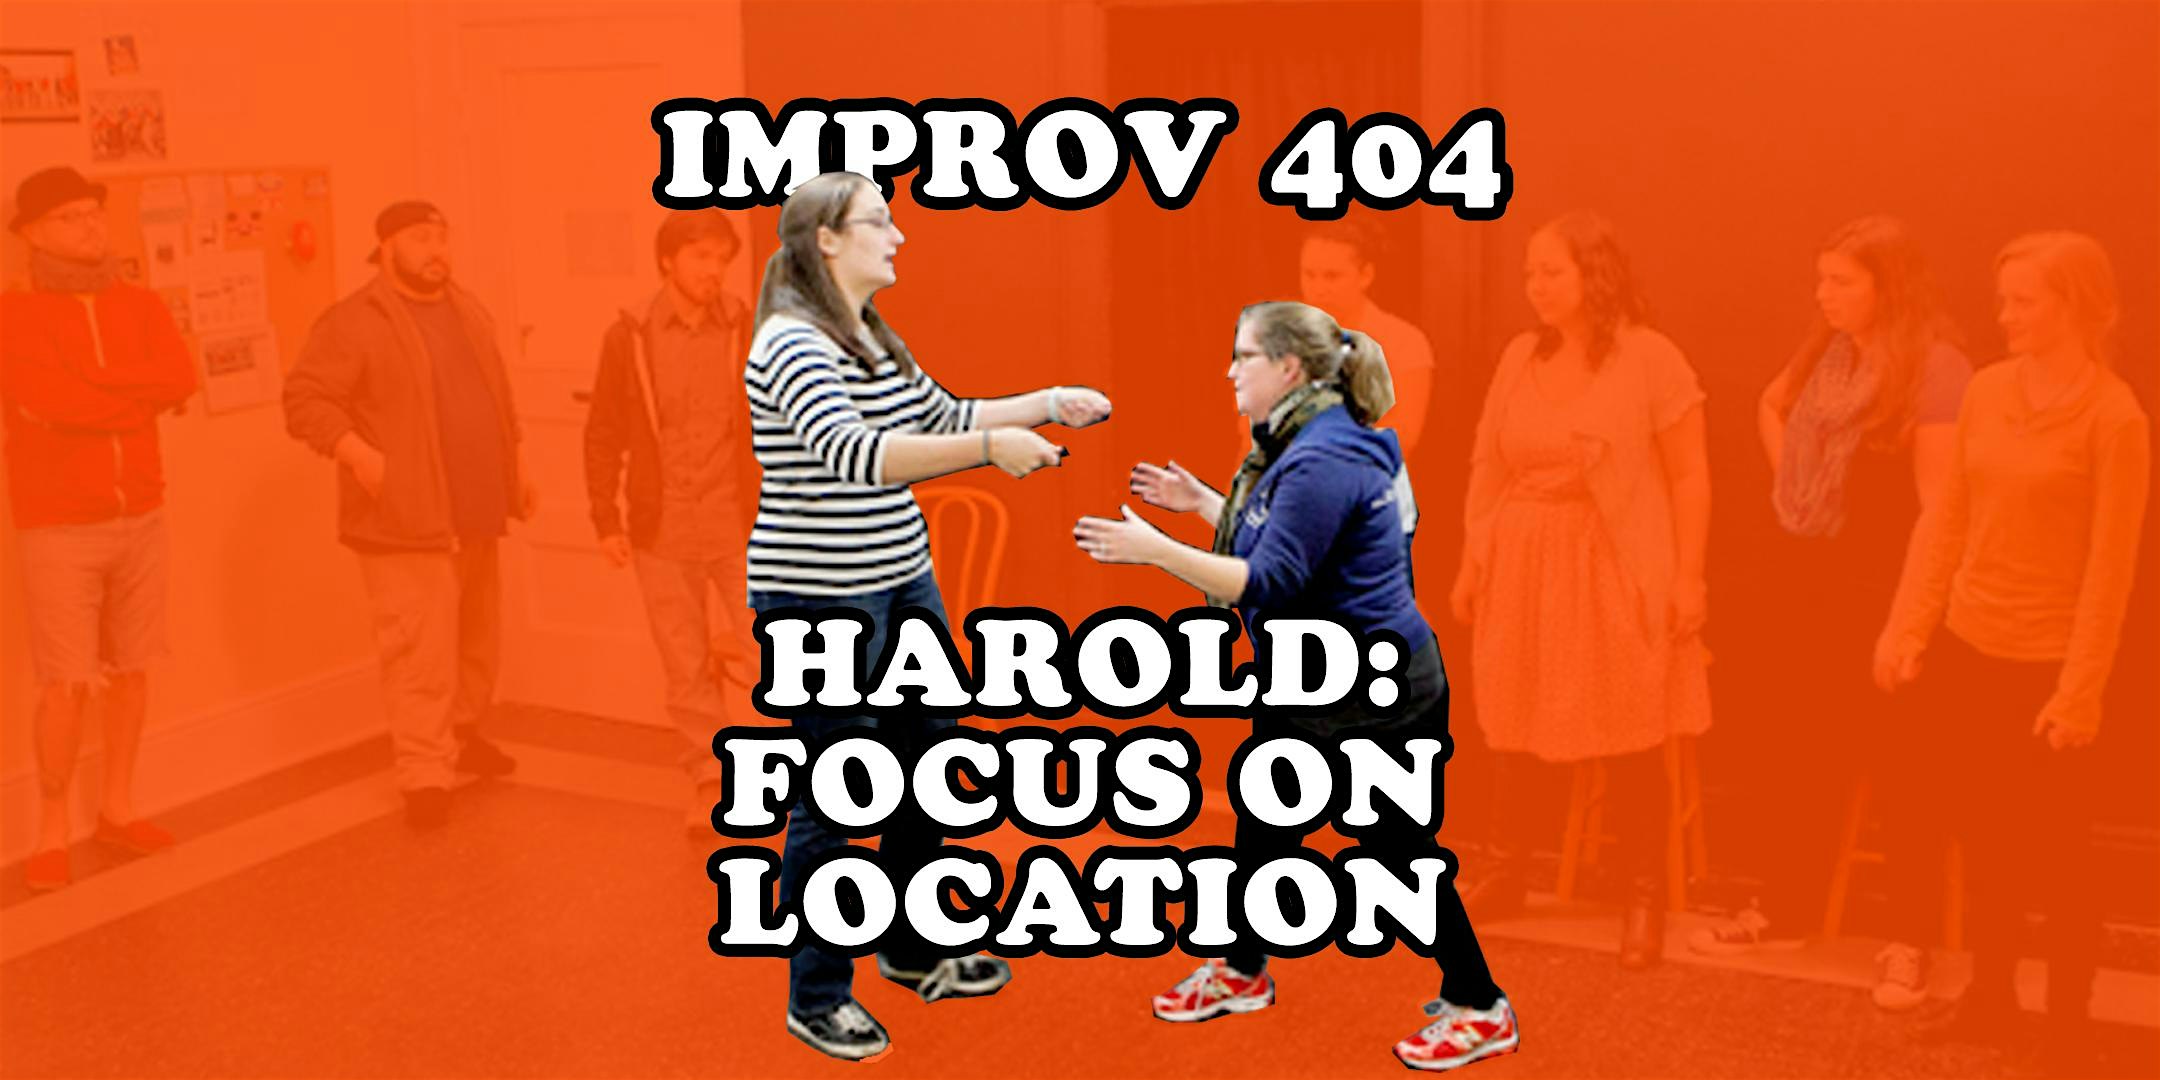 Improv 404 - Harold: Focus on Location